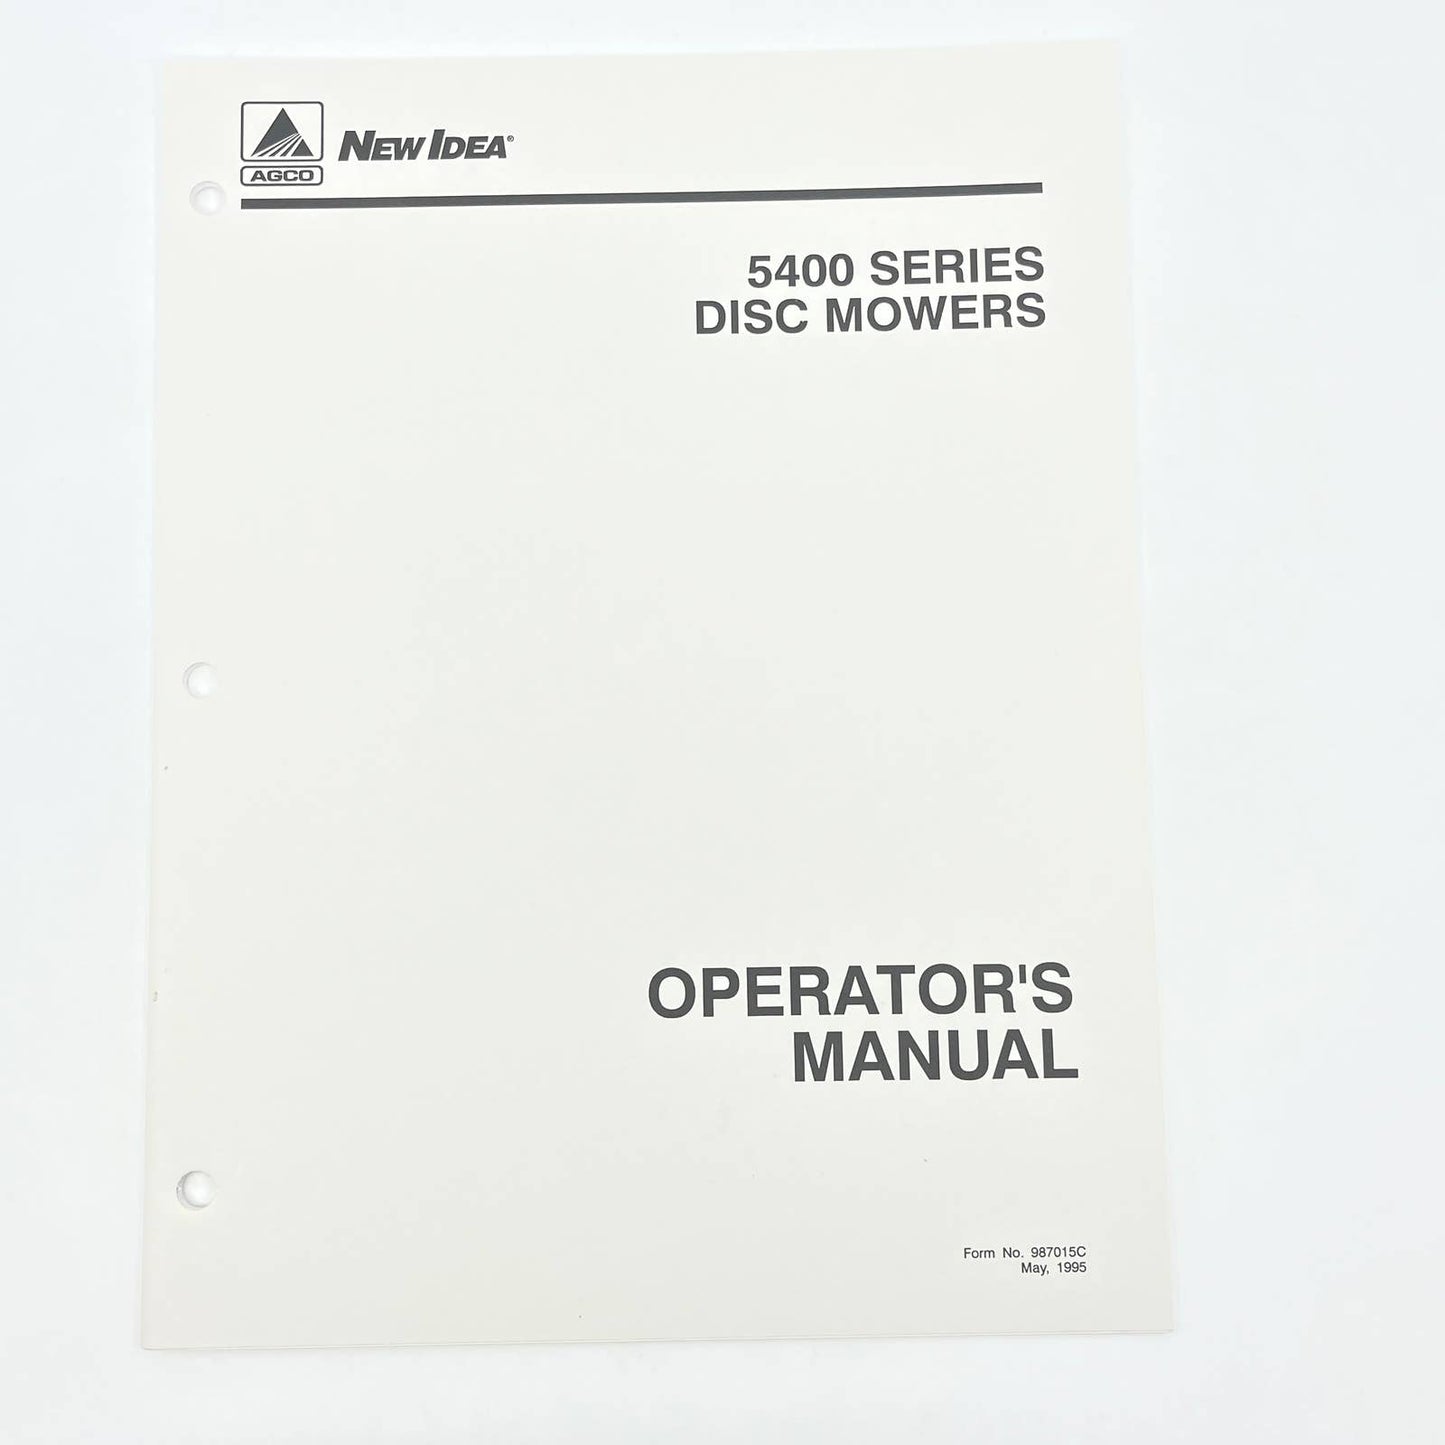 Original 1995 New Idea Operator's Manual 5400 Series Disc Mowers 987015C TB9